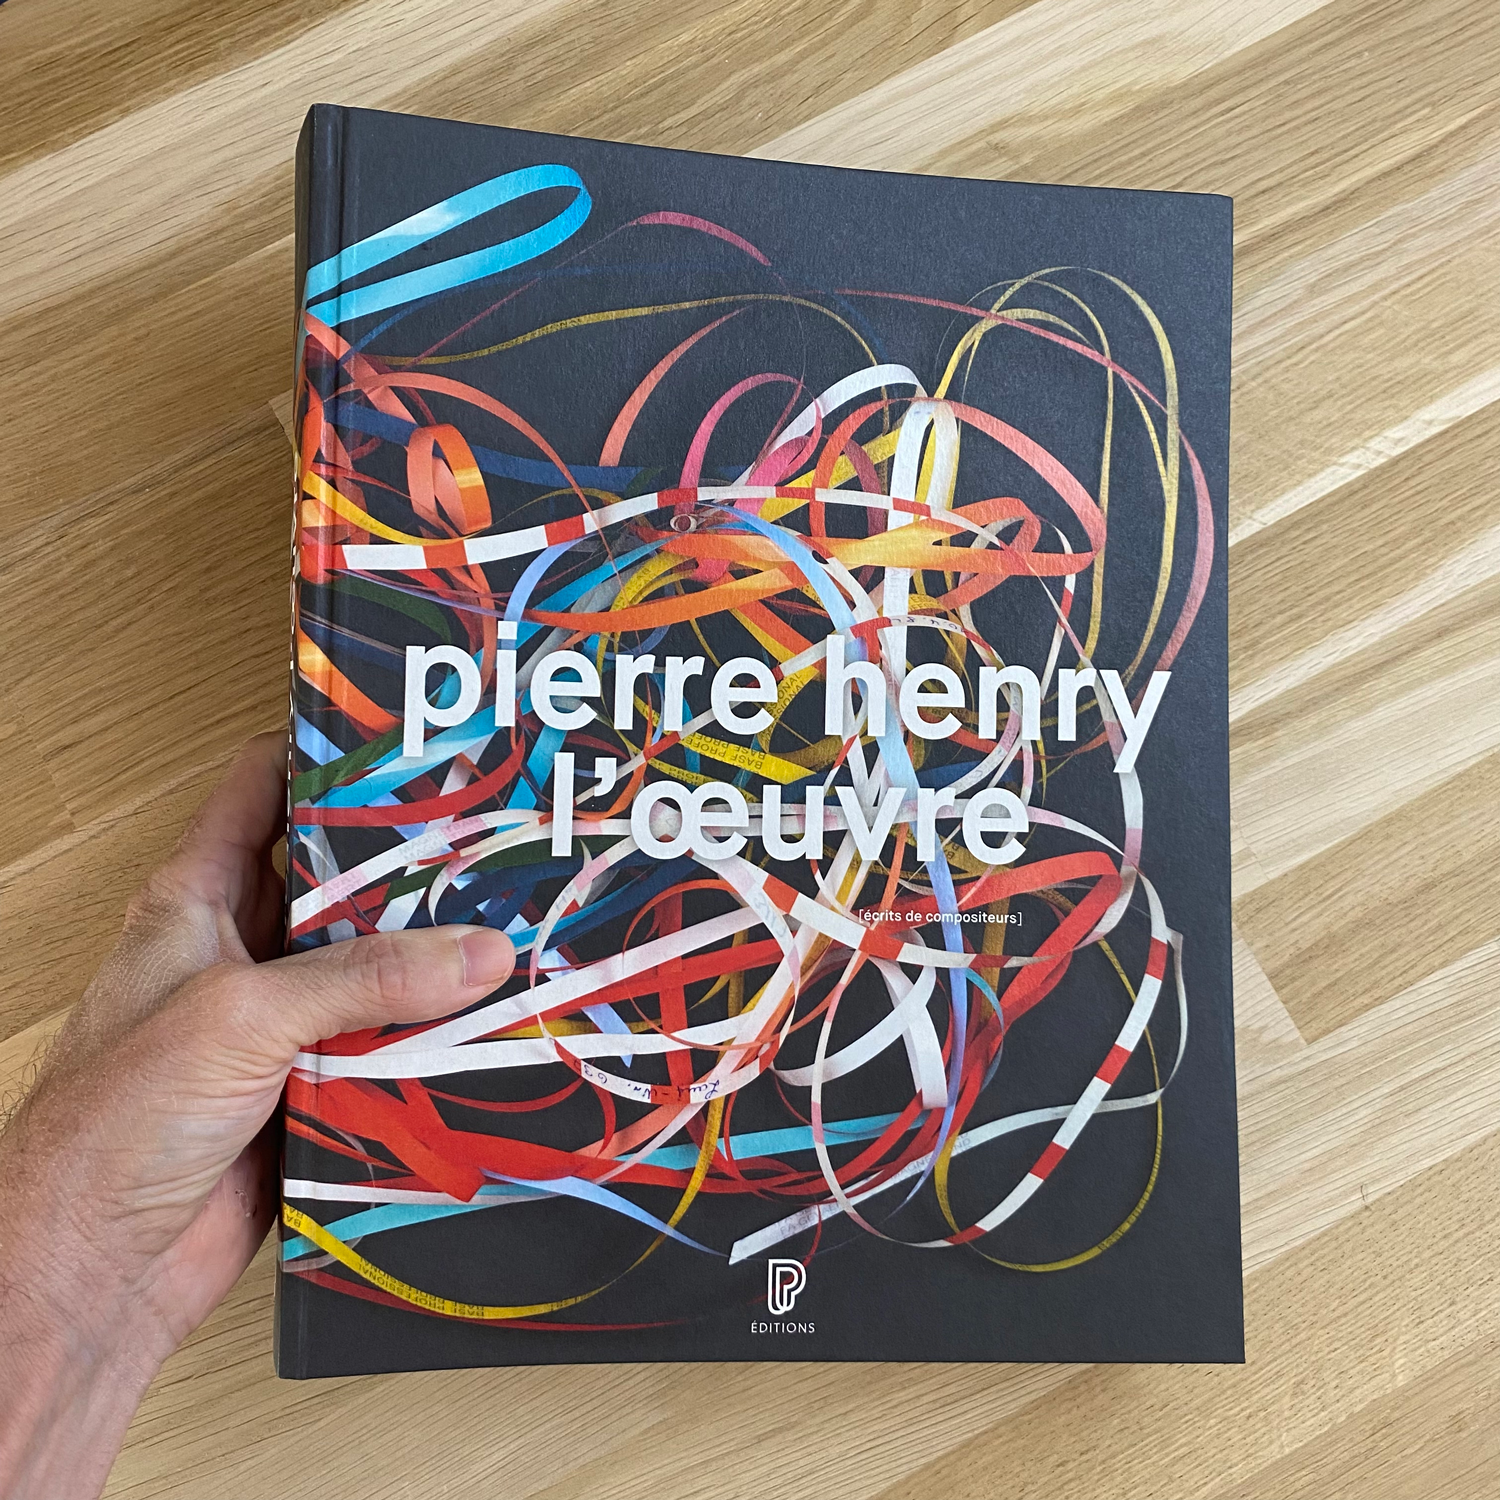 PierreHenry_Philharmonie_2021